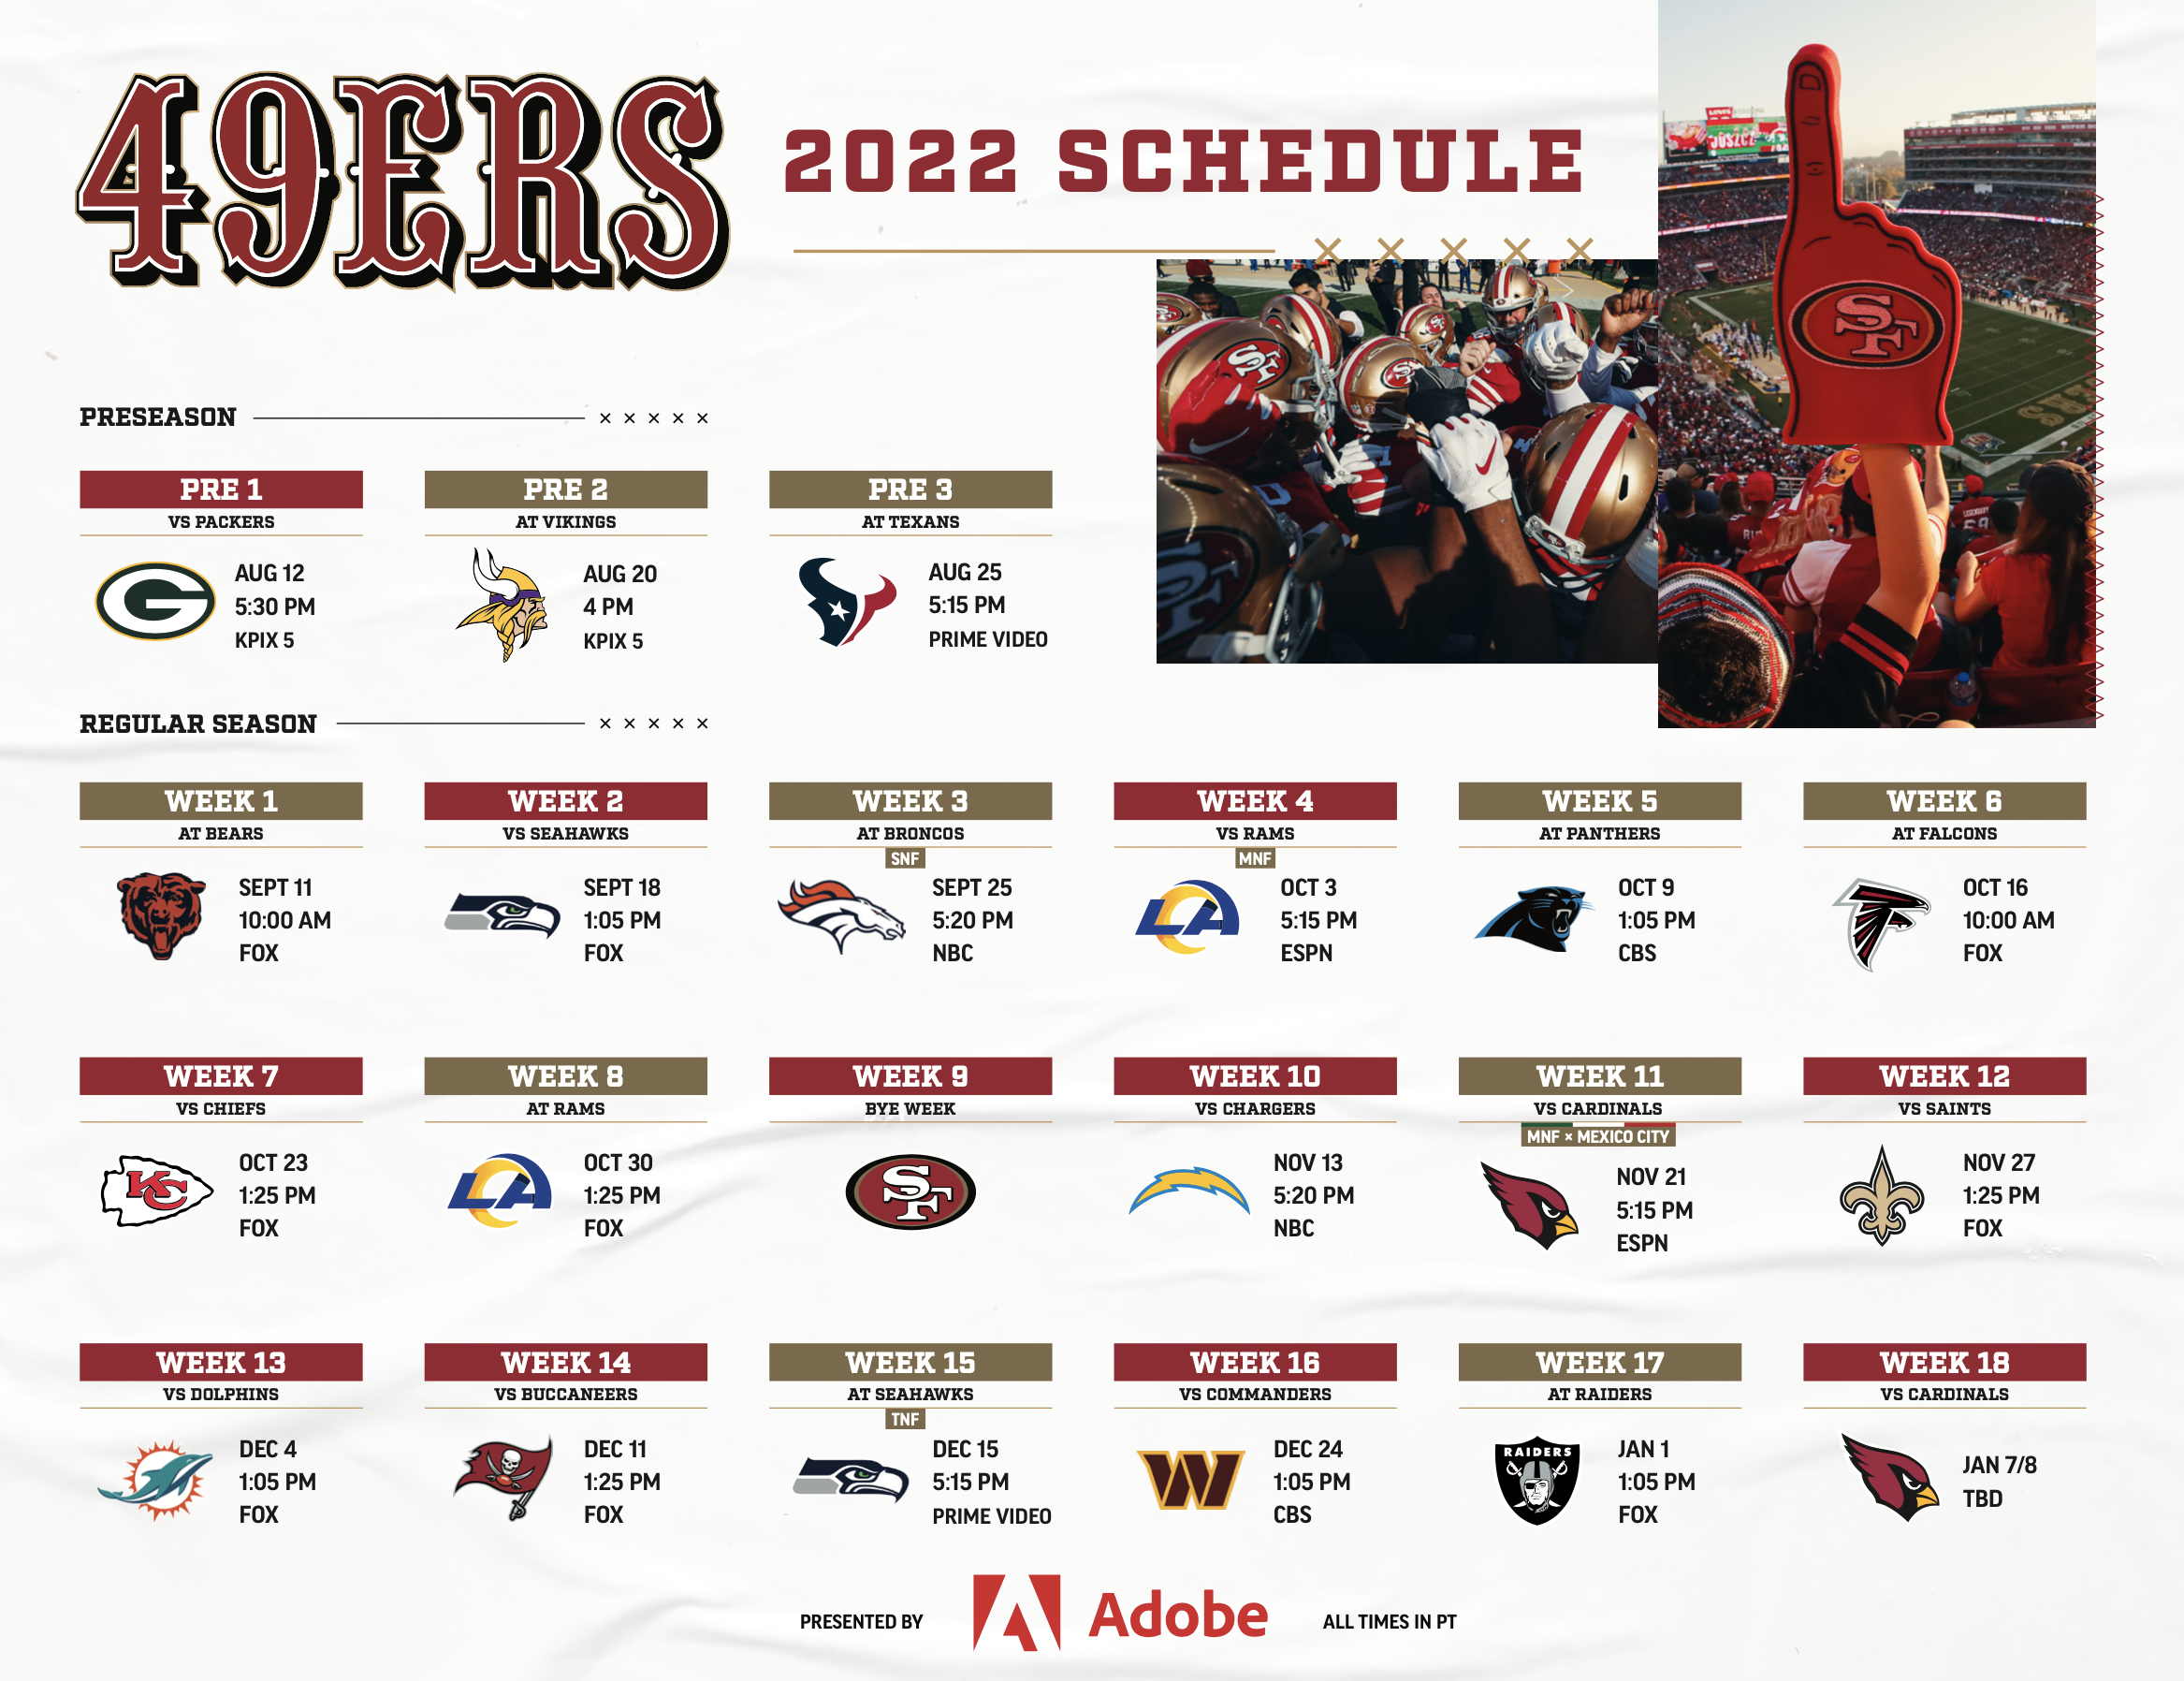 Actualizar 81+ imagen 49ers schedule levi’s stadium